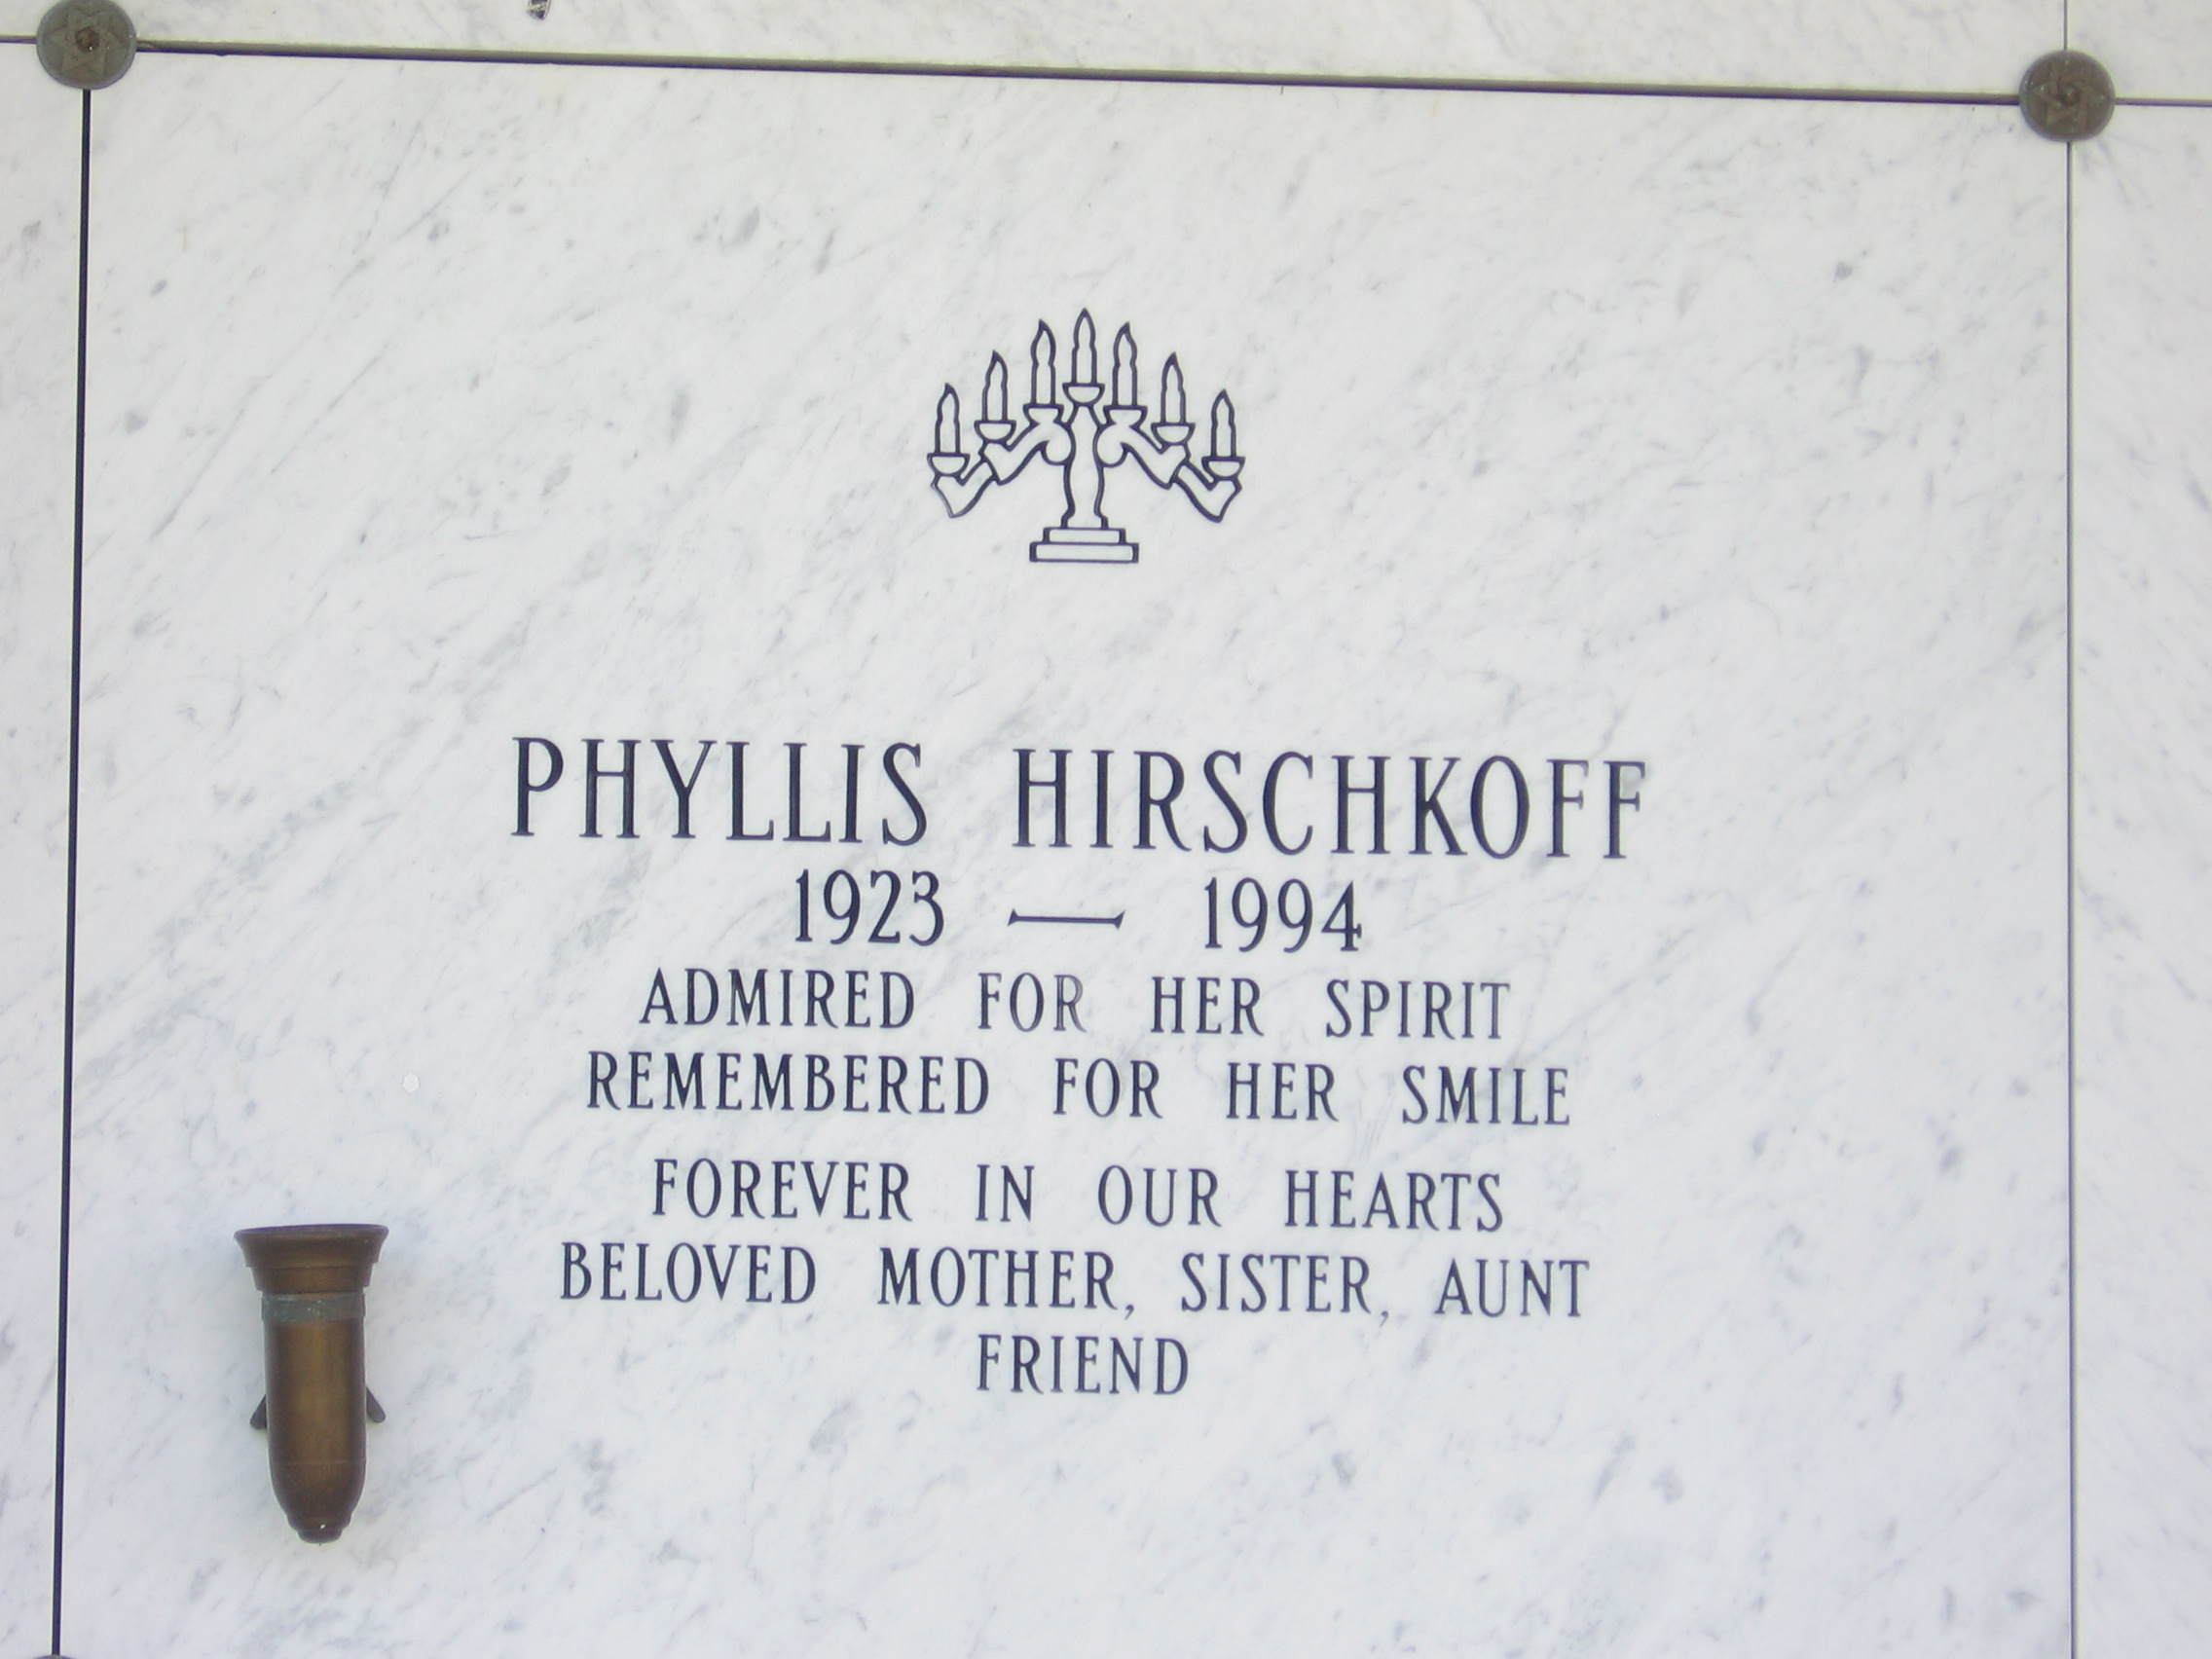 Phyllis Hirschkoff